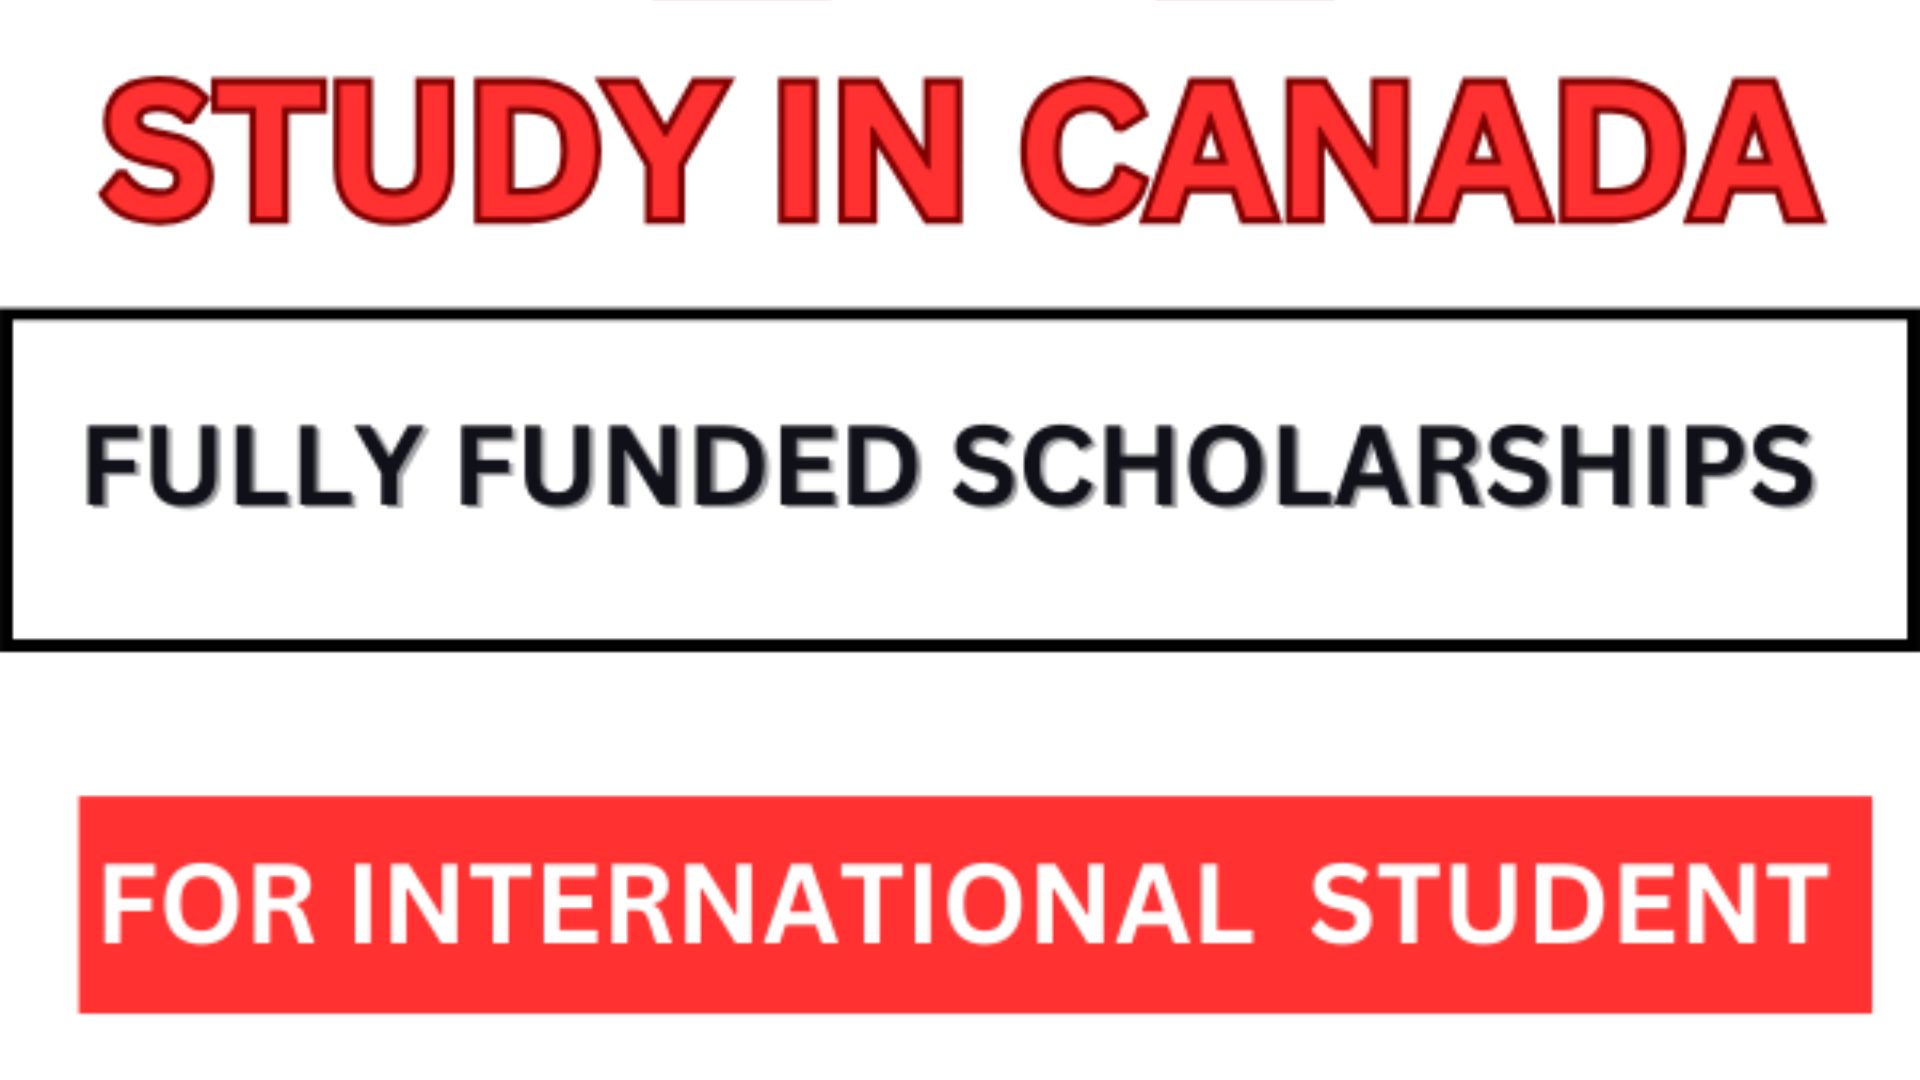 Fully funded Canada scholarship